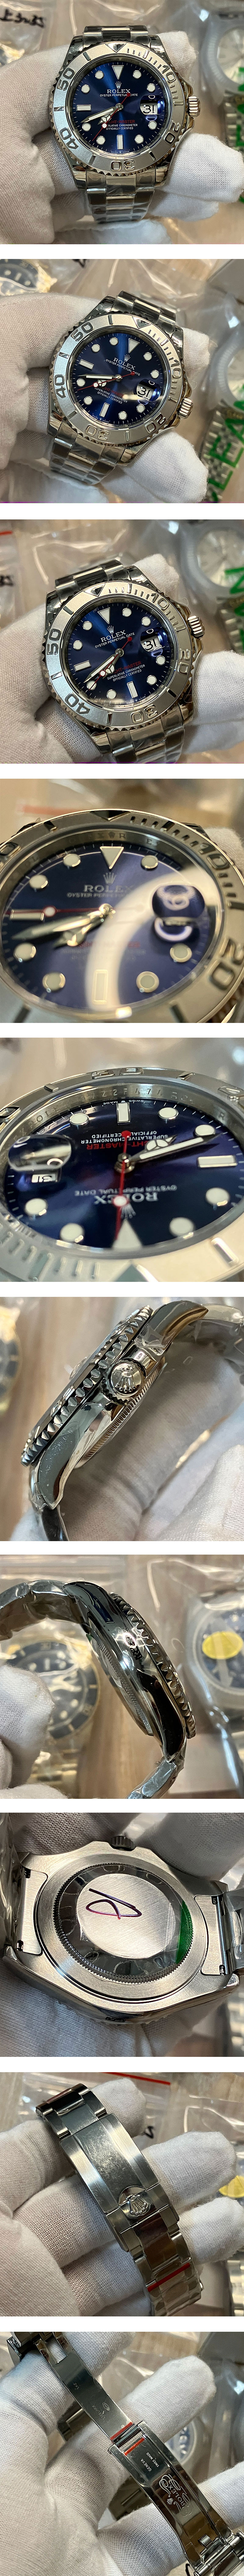 N級品 ロレックスコピー時計 ヨットマスター126622 ブルー 40mm 